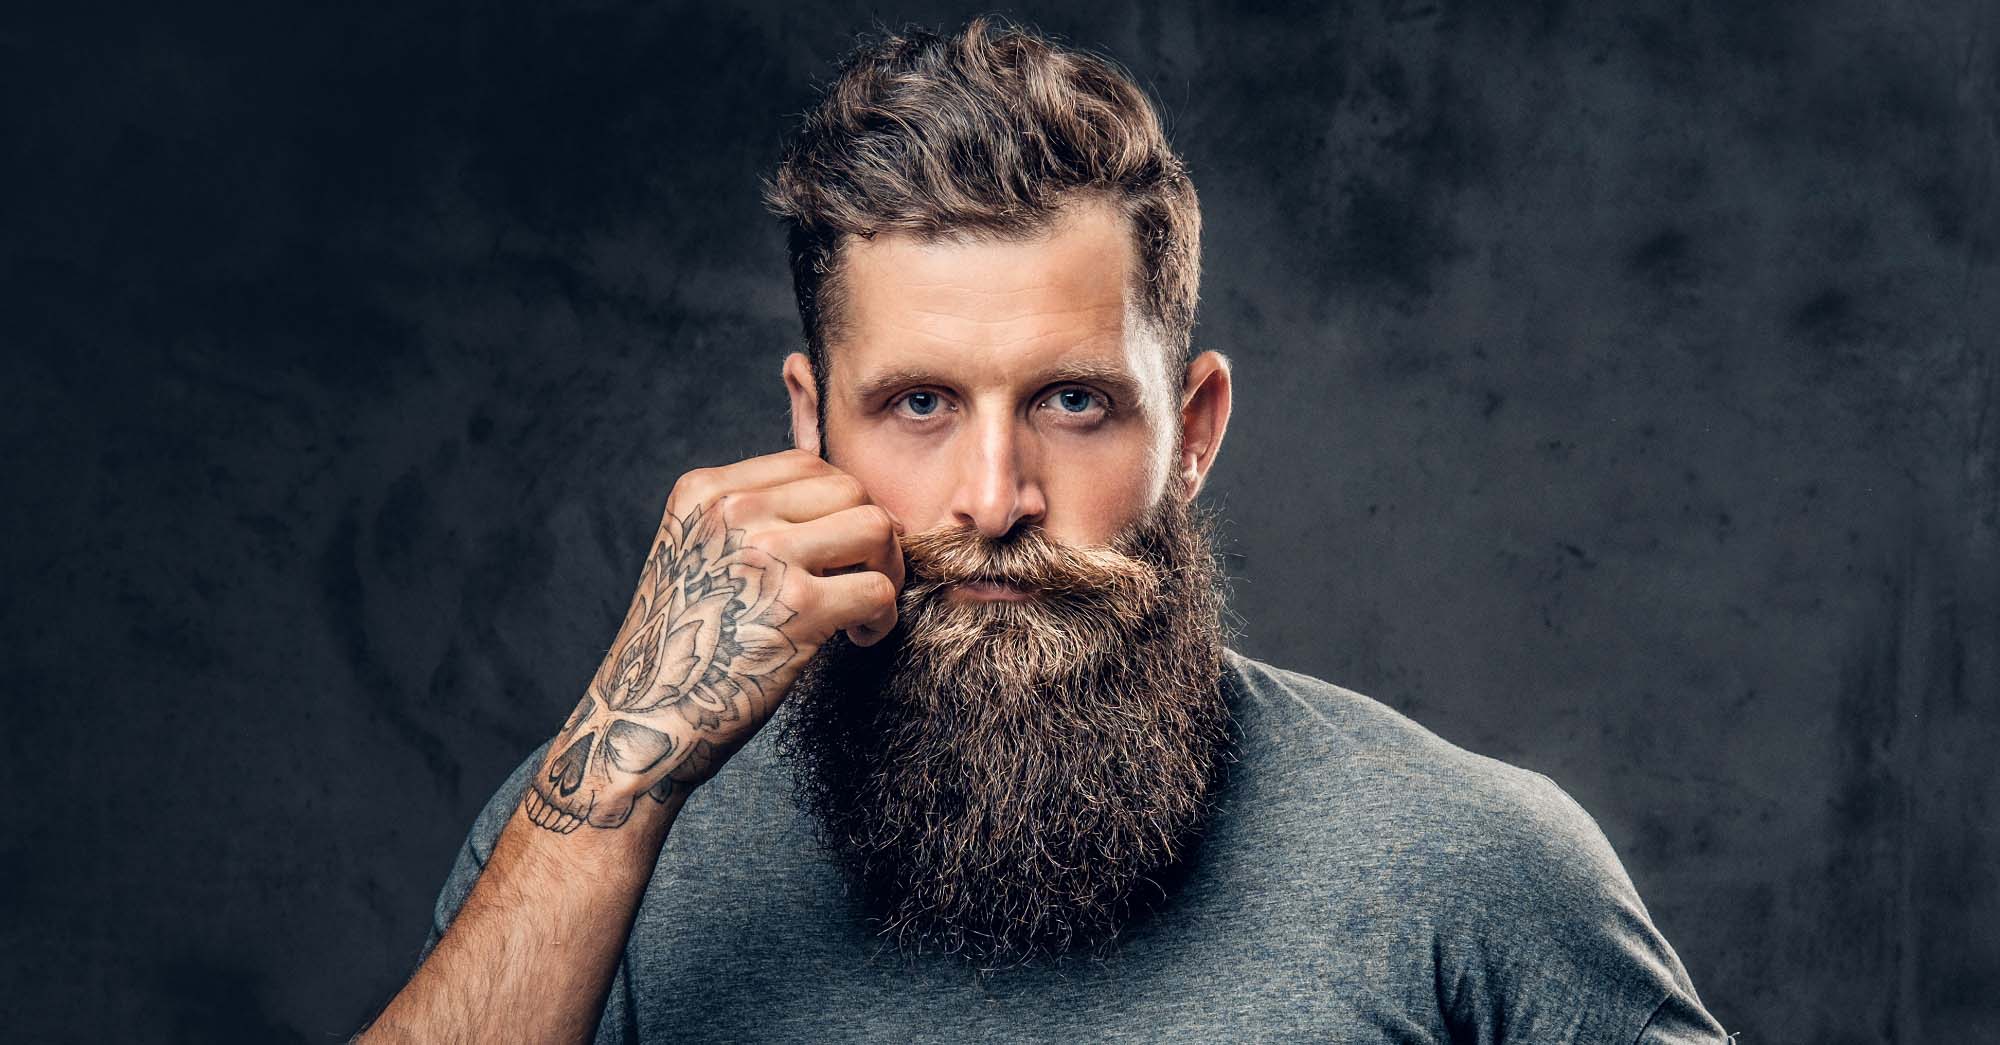 man with big beard using beard care products such as beard oil beard balm beard butter to help maintain a good looking and healthy thick beard.